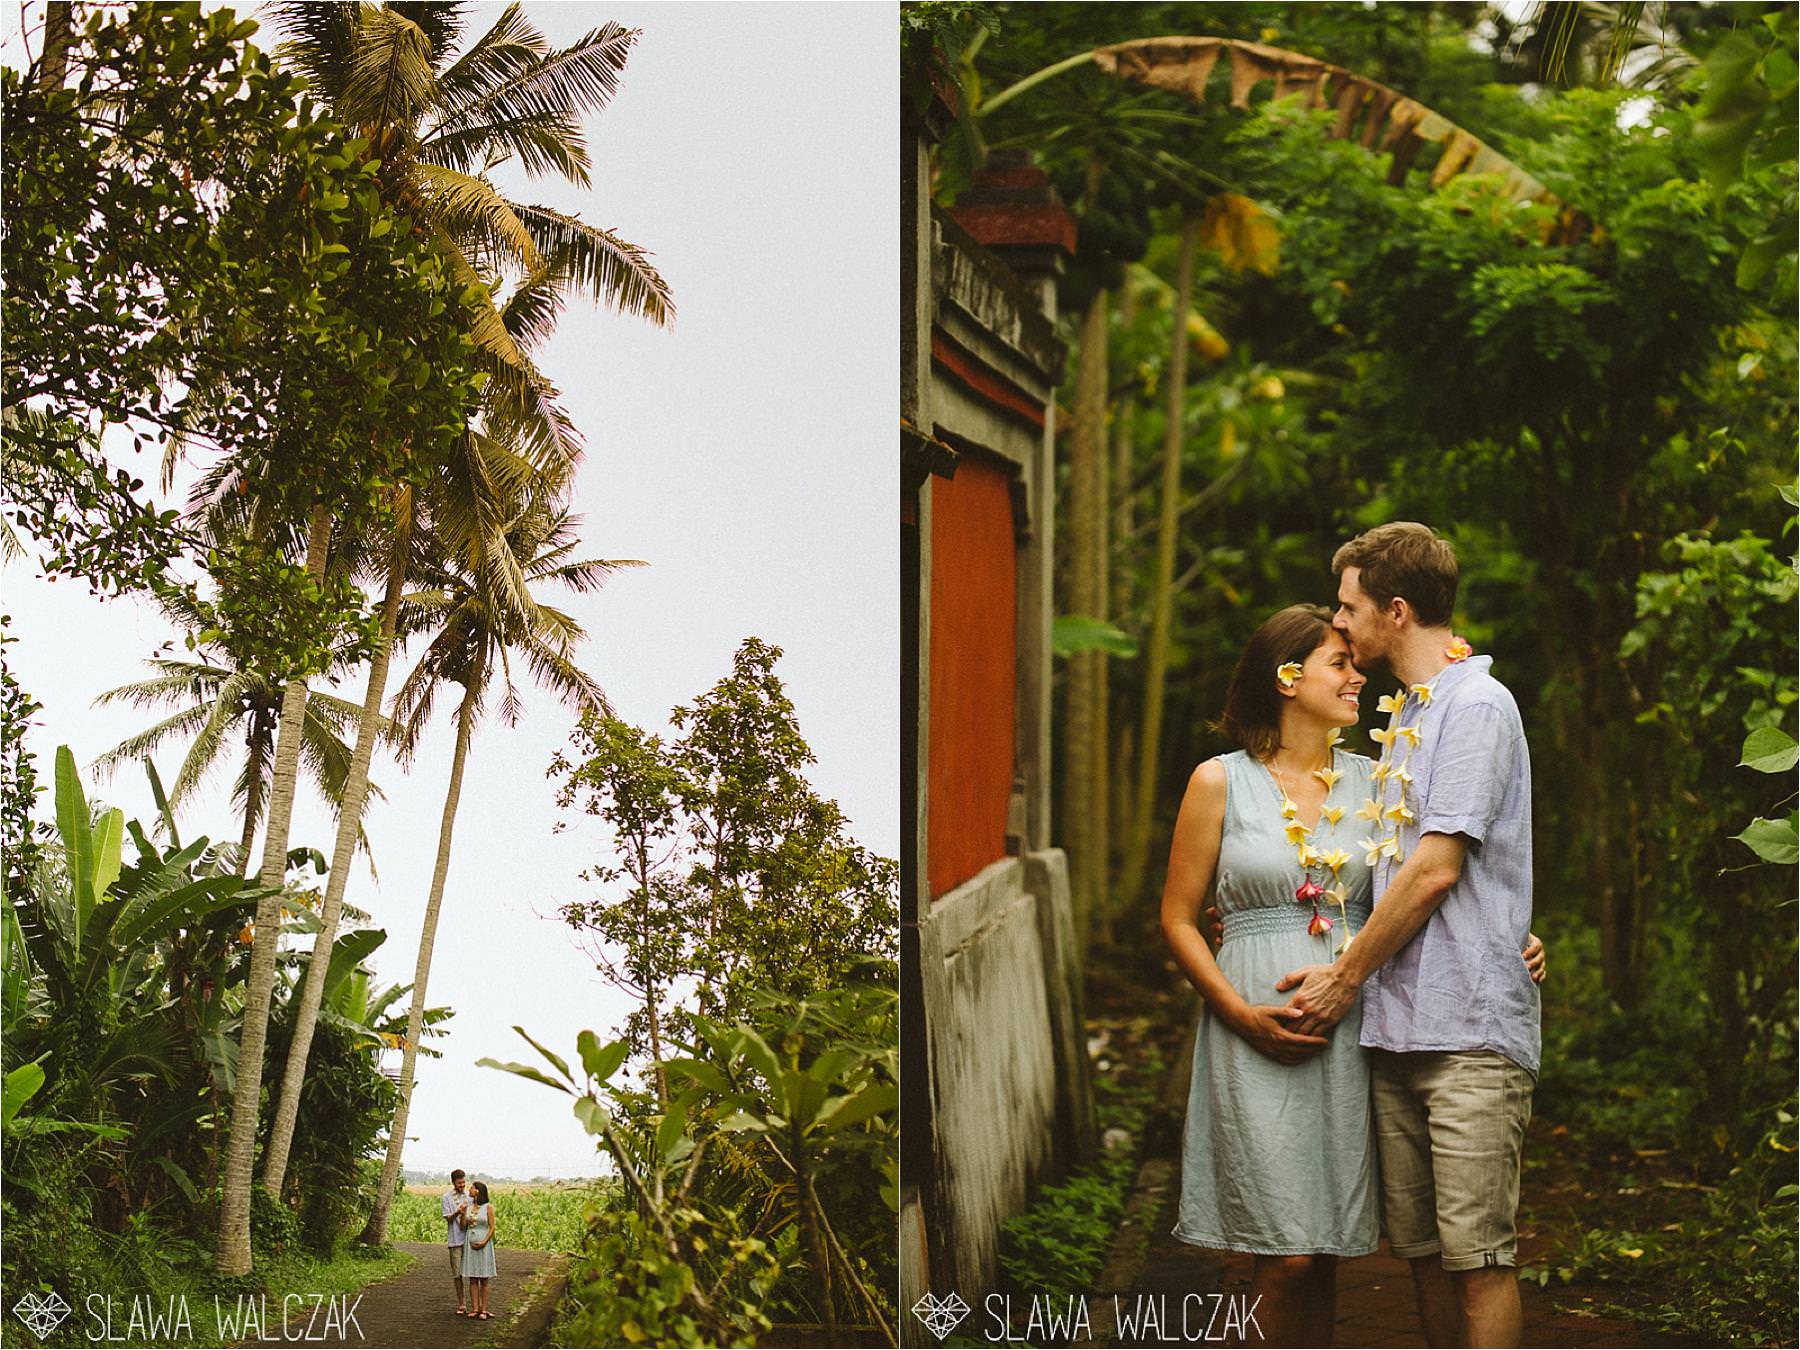 Destination Engagement Photography – Paddy Field, Ubud, Bali